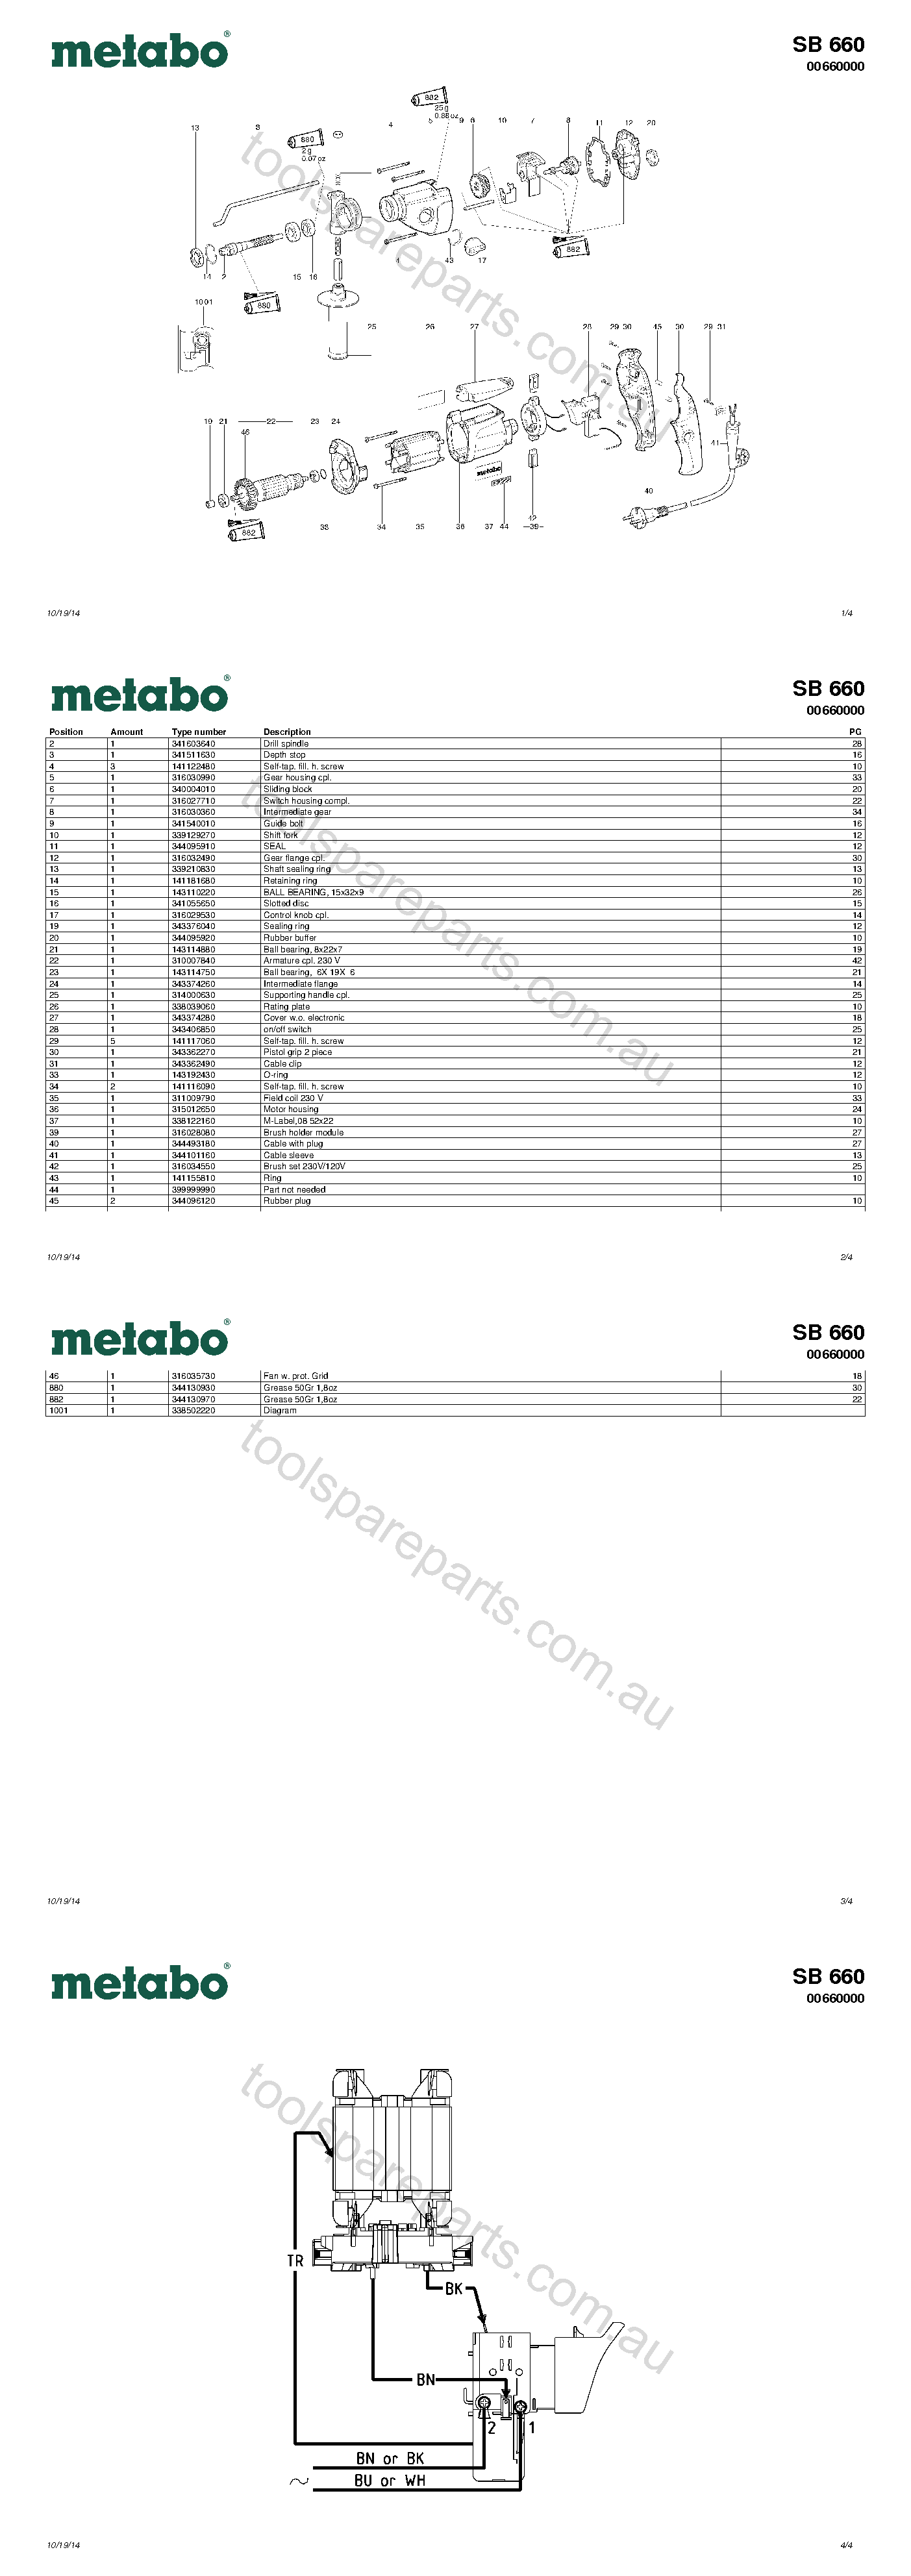 Metabo SB 660 00660000  Diagram 1